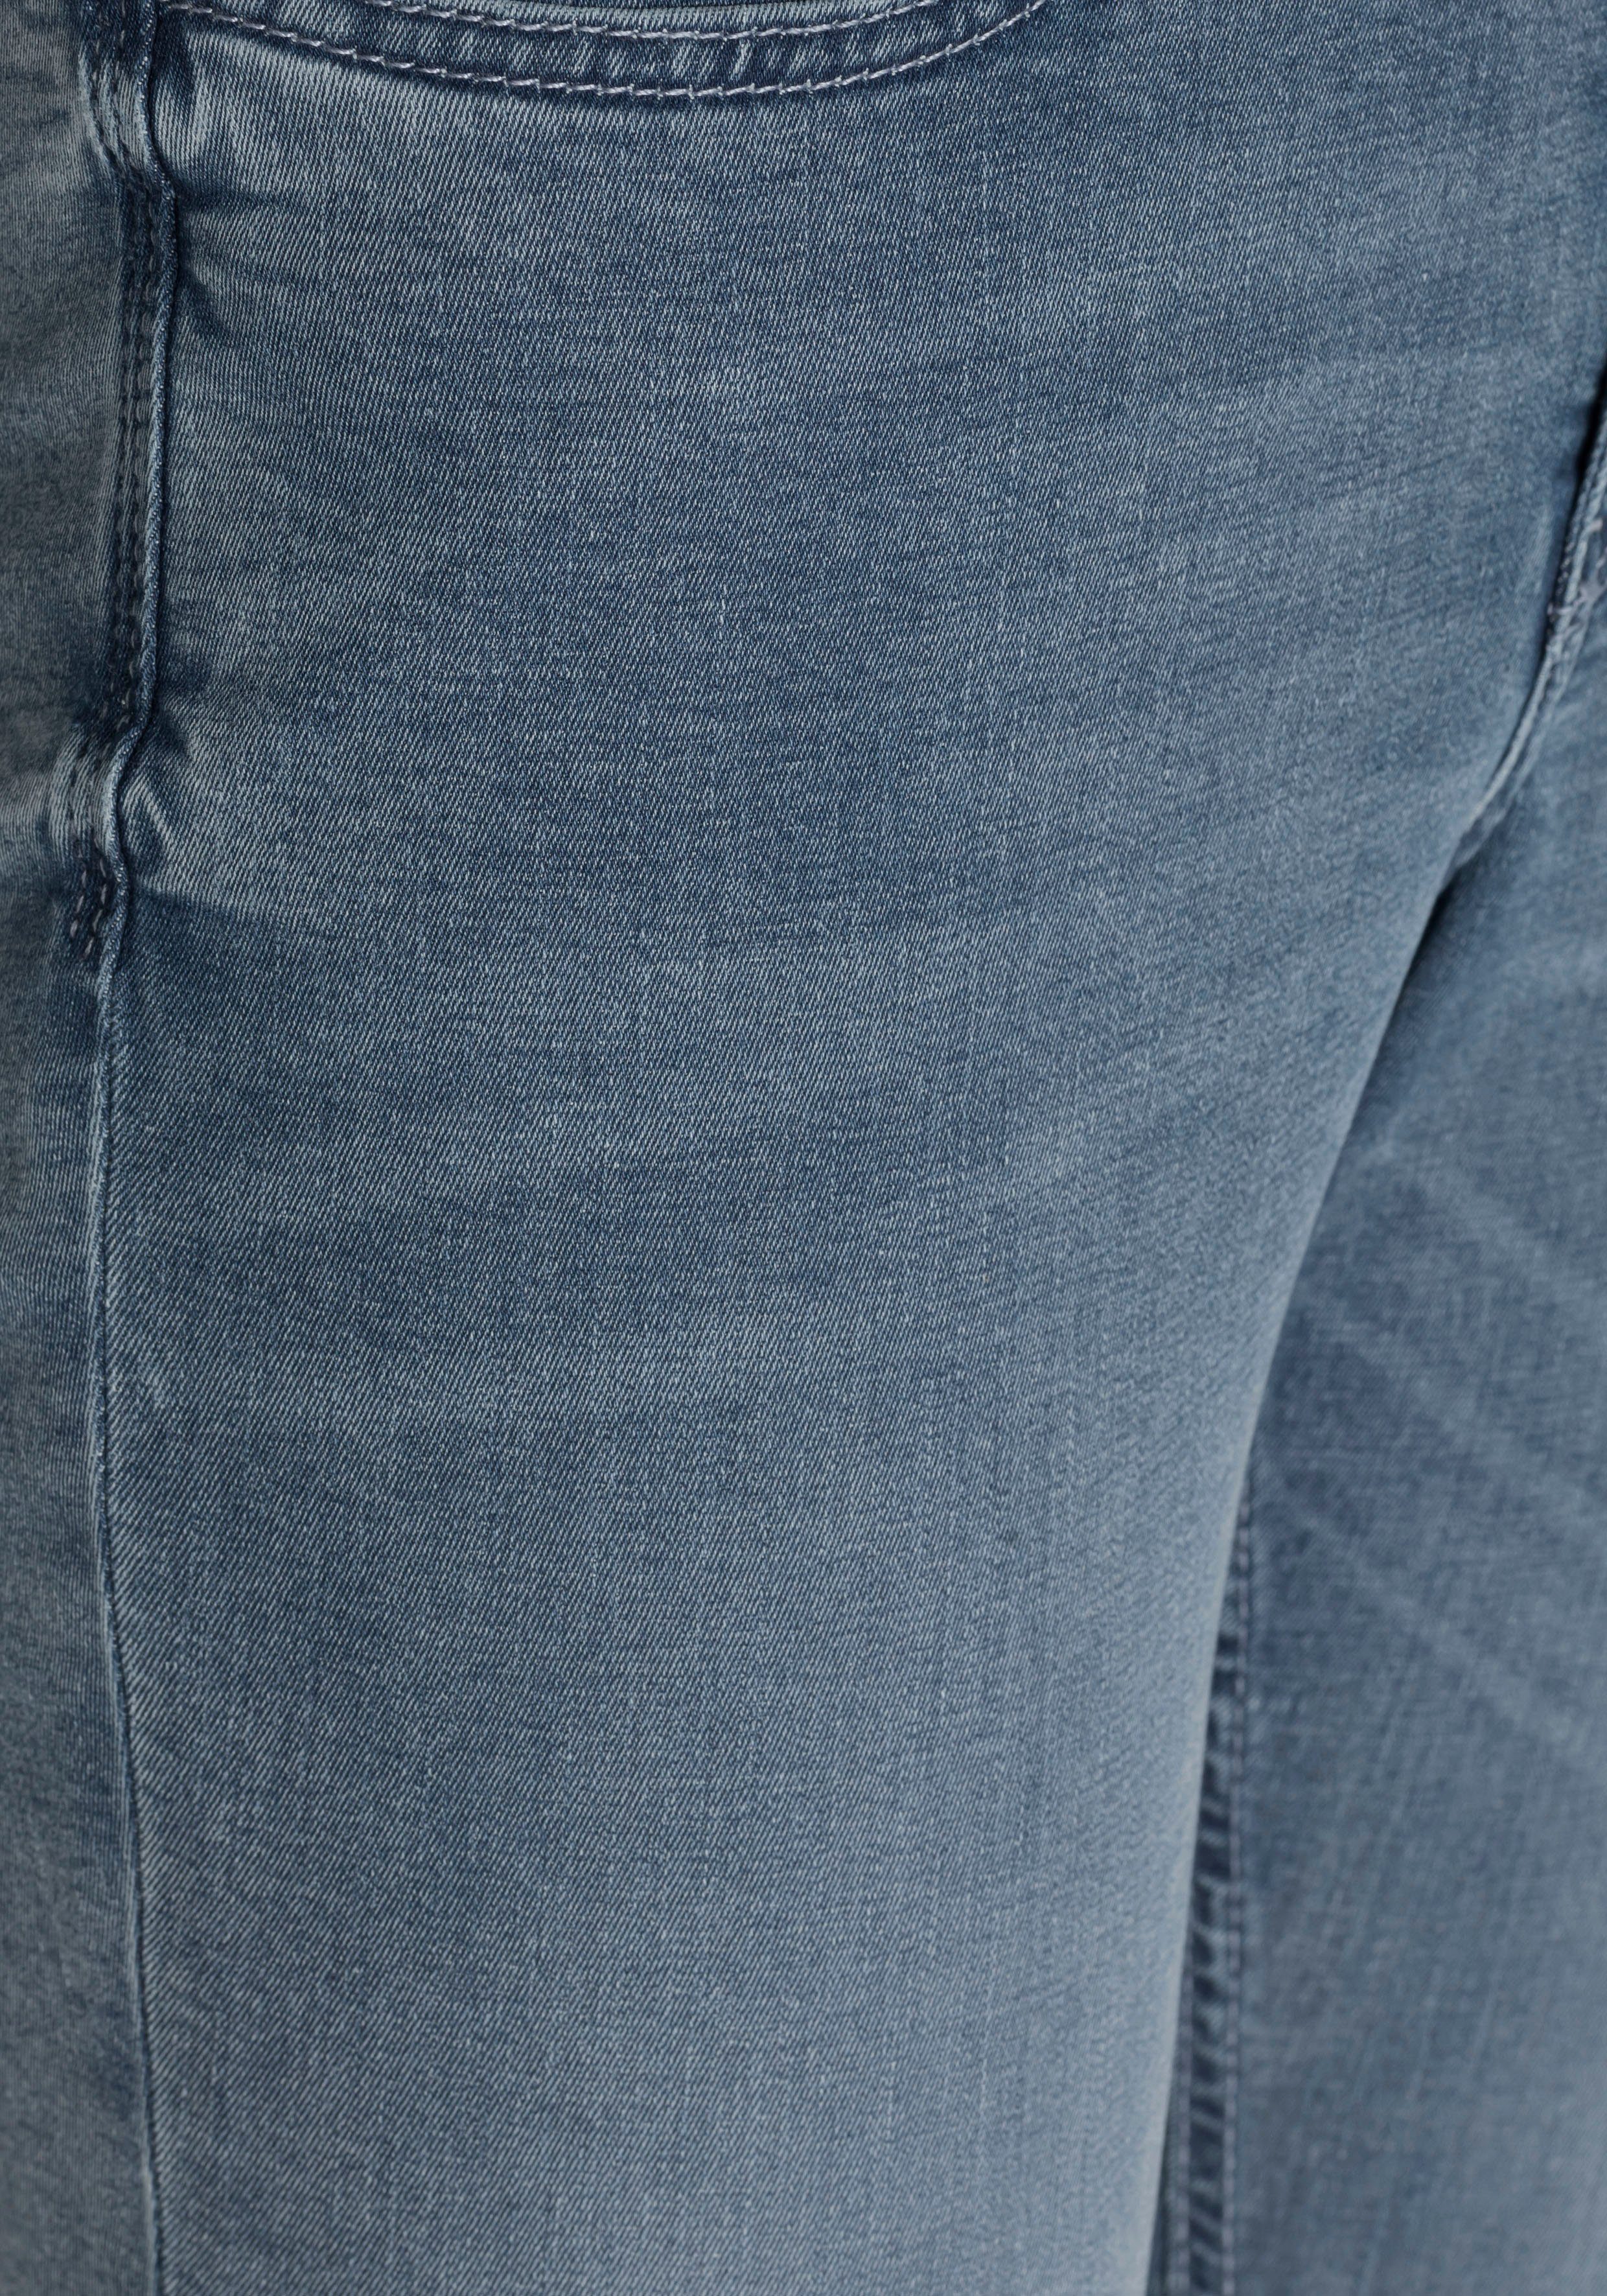 Hiperstretch-Skinny bequem MAC Power-Stretch Tag sitzt random Skinny-fit-Jeans den light blue wash Qualität ganzen